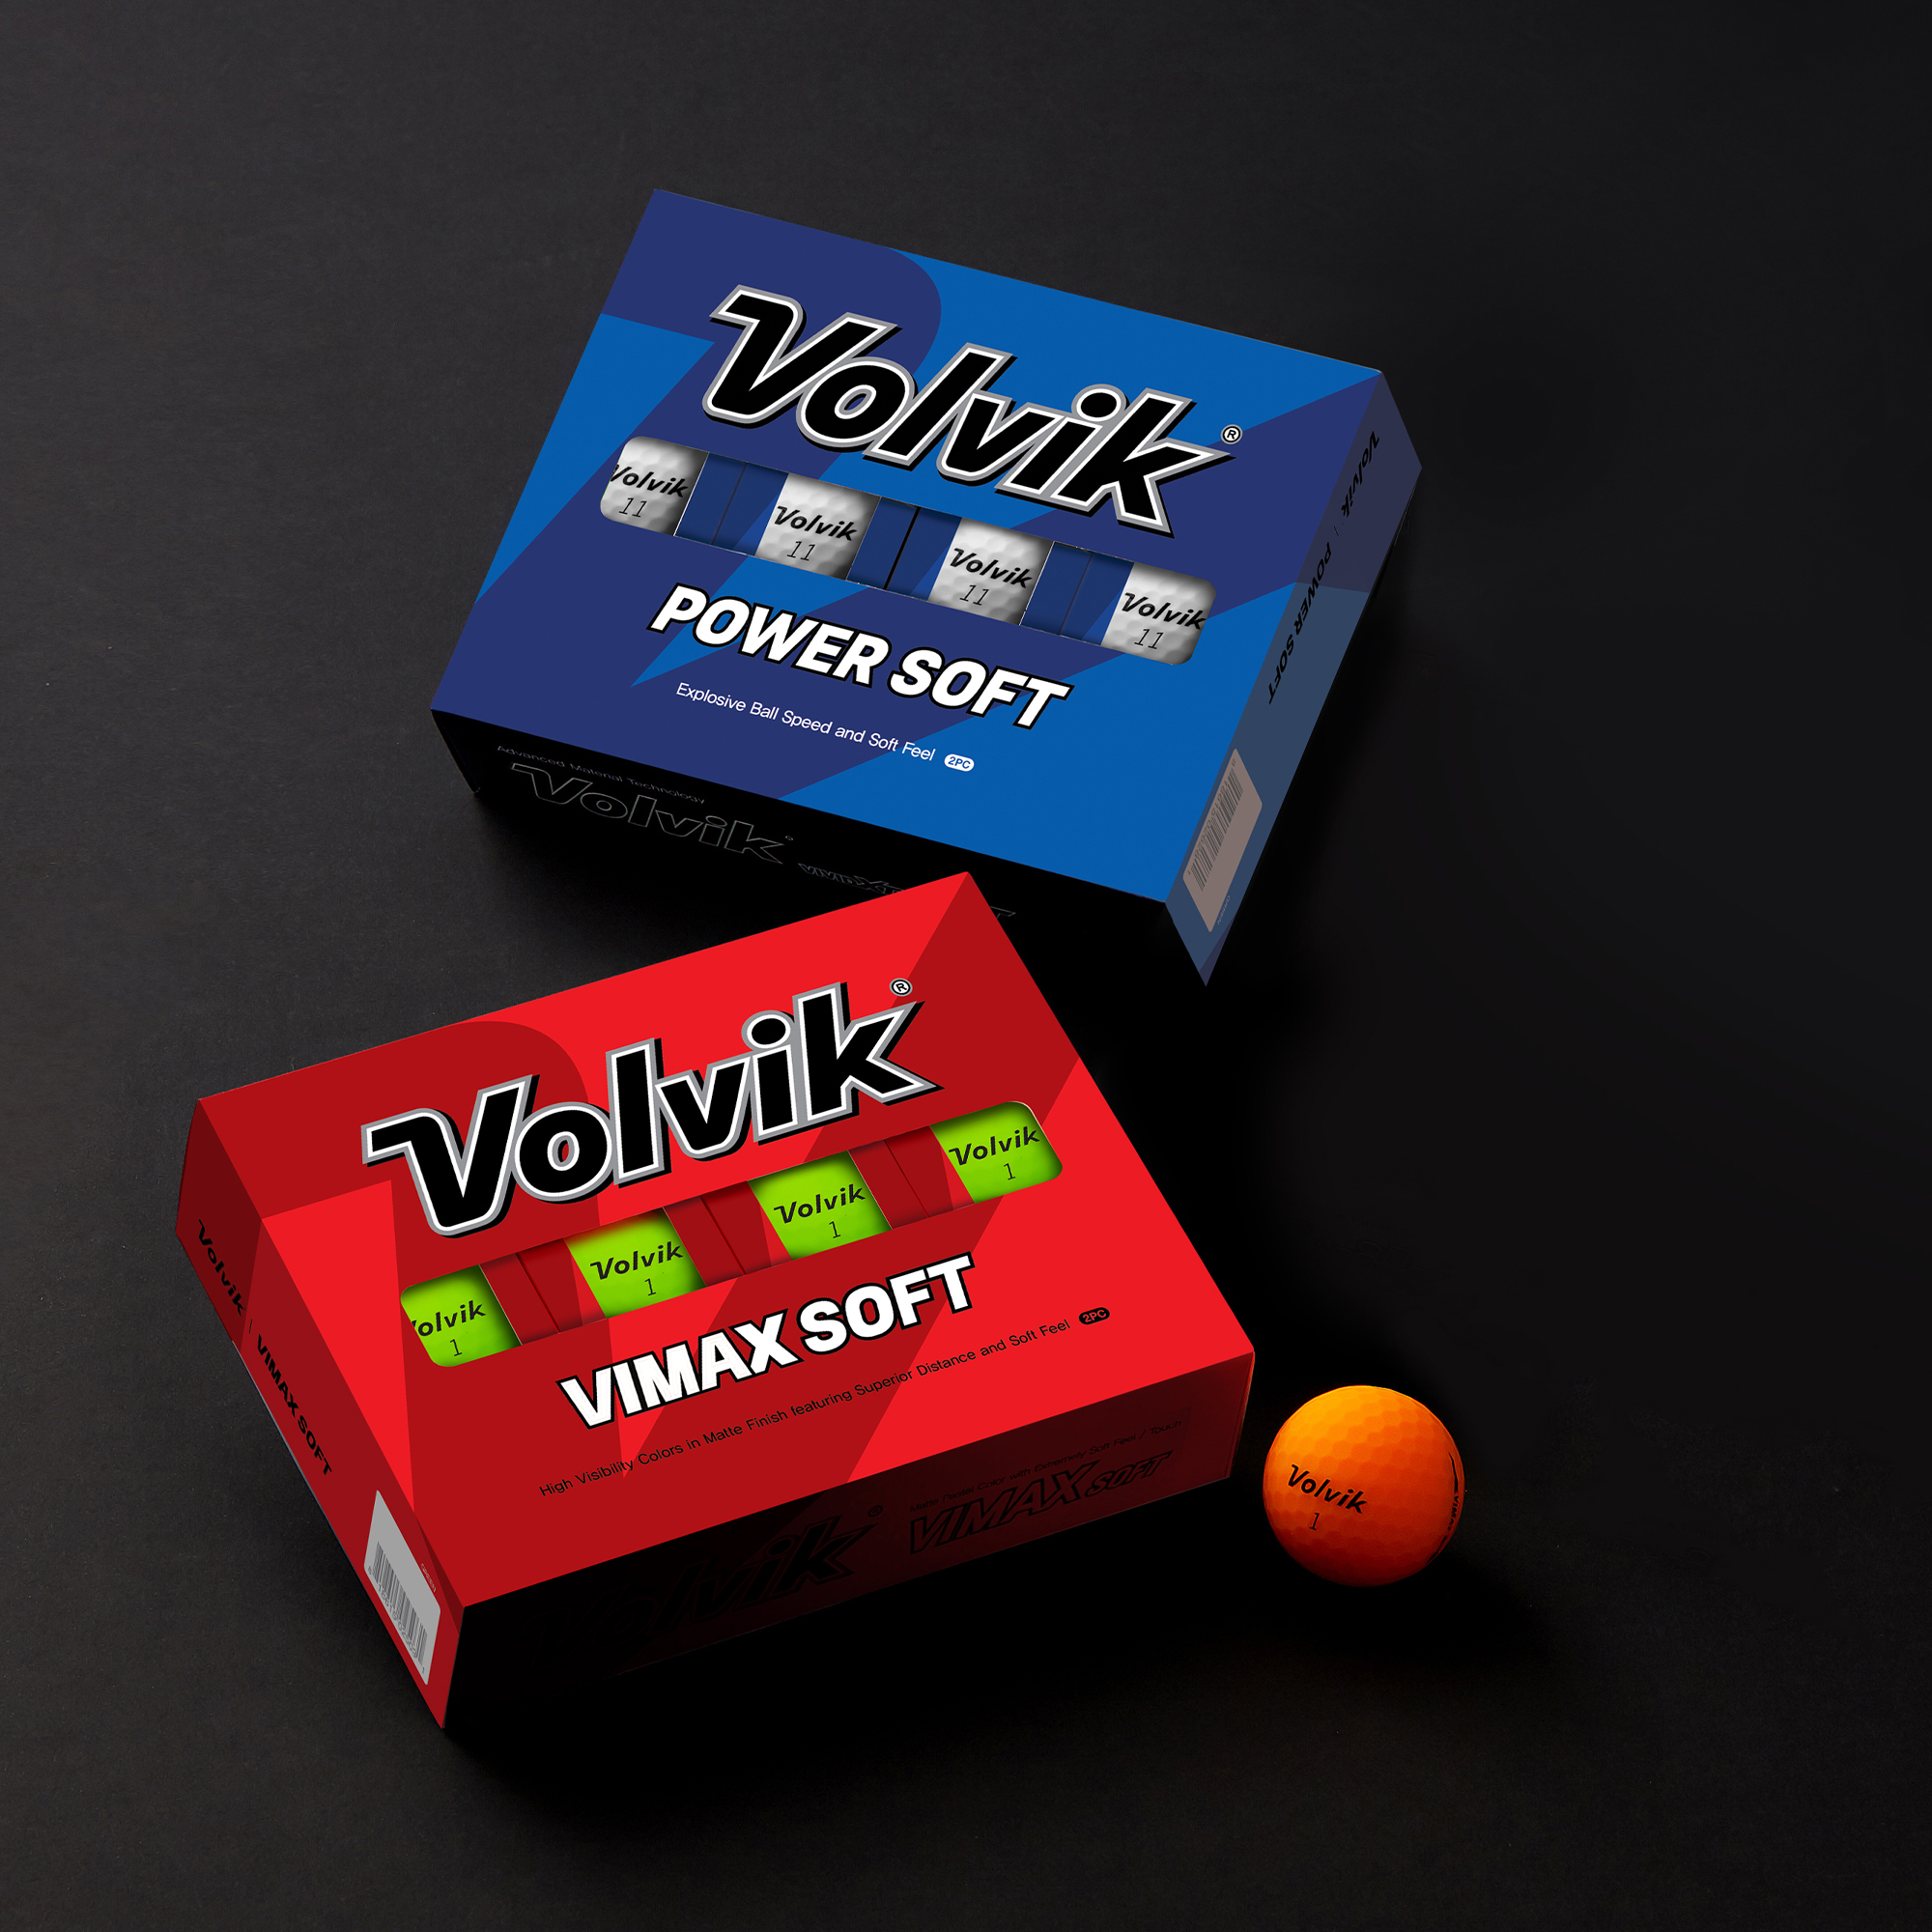 Volvik Golf Vimax Soft, Power Soft